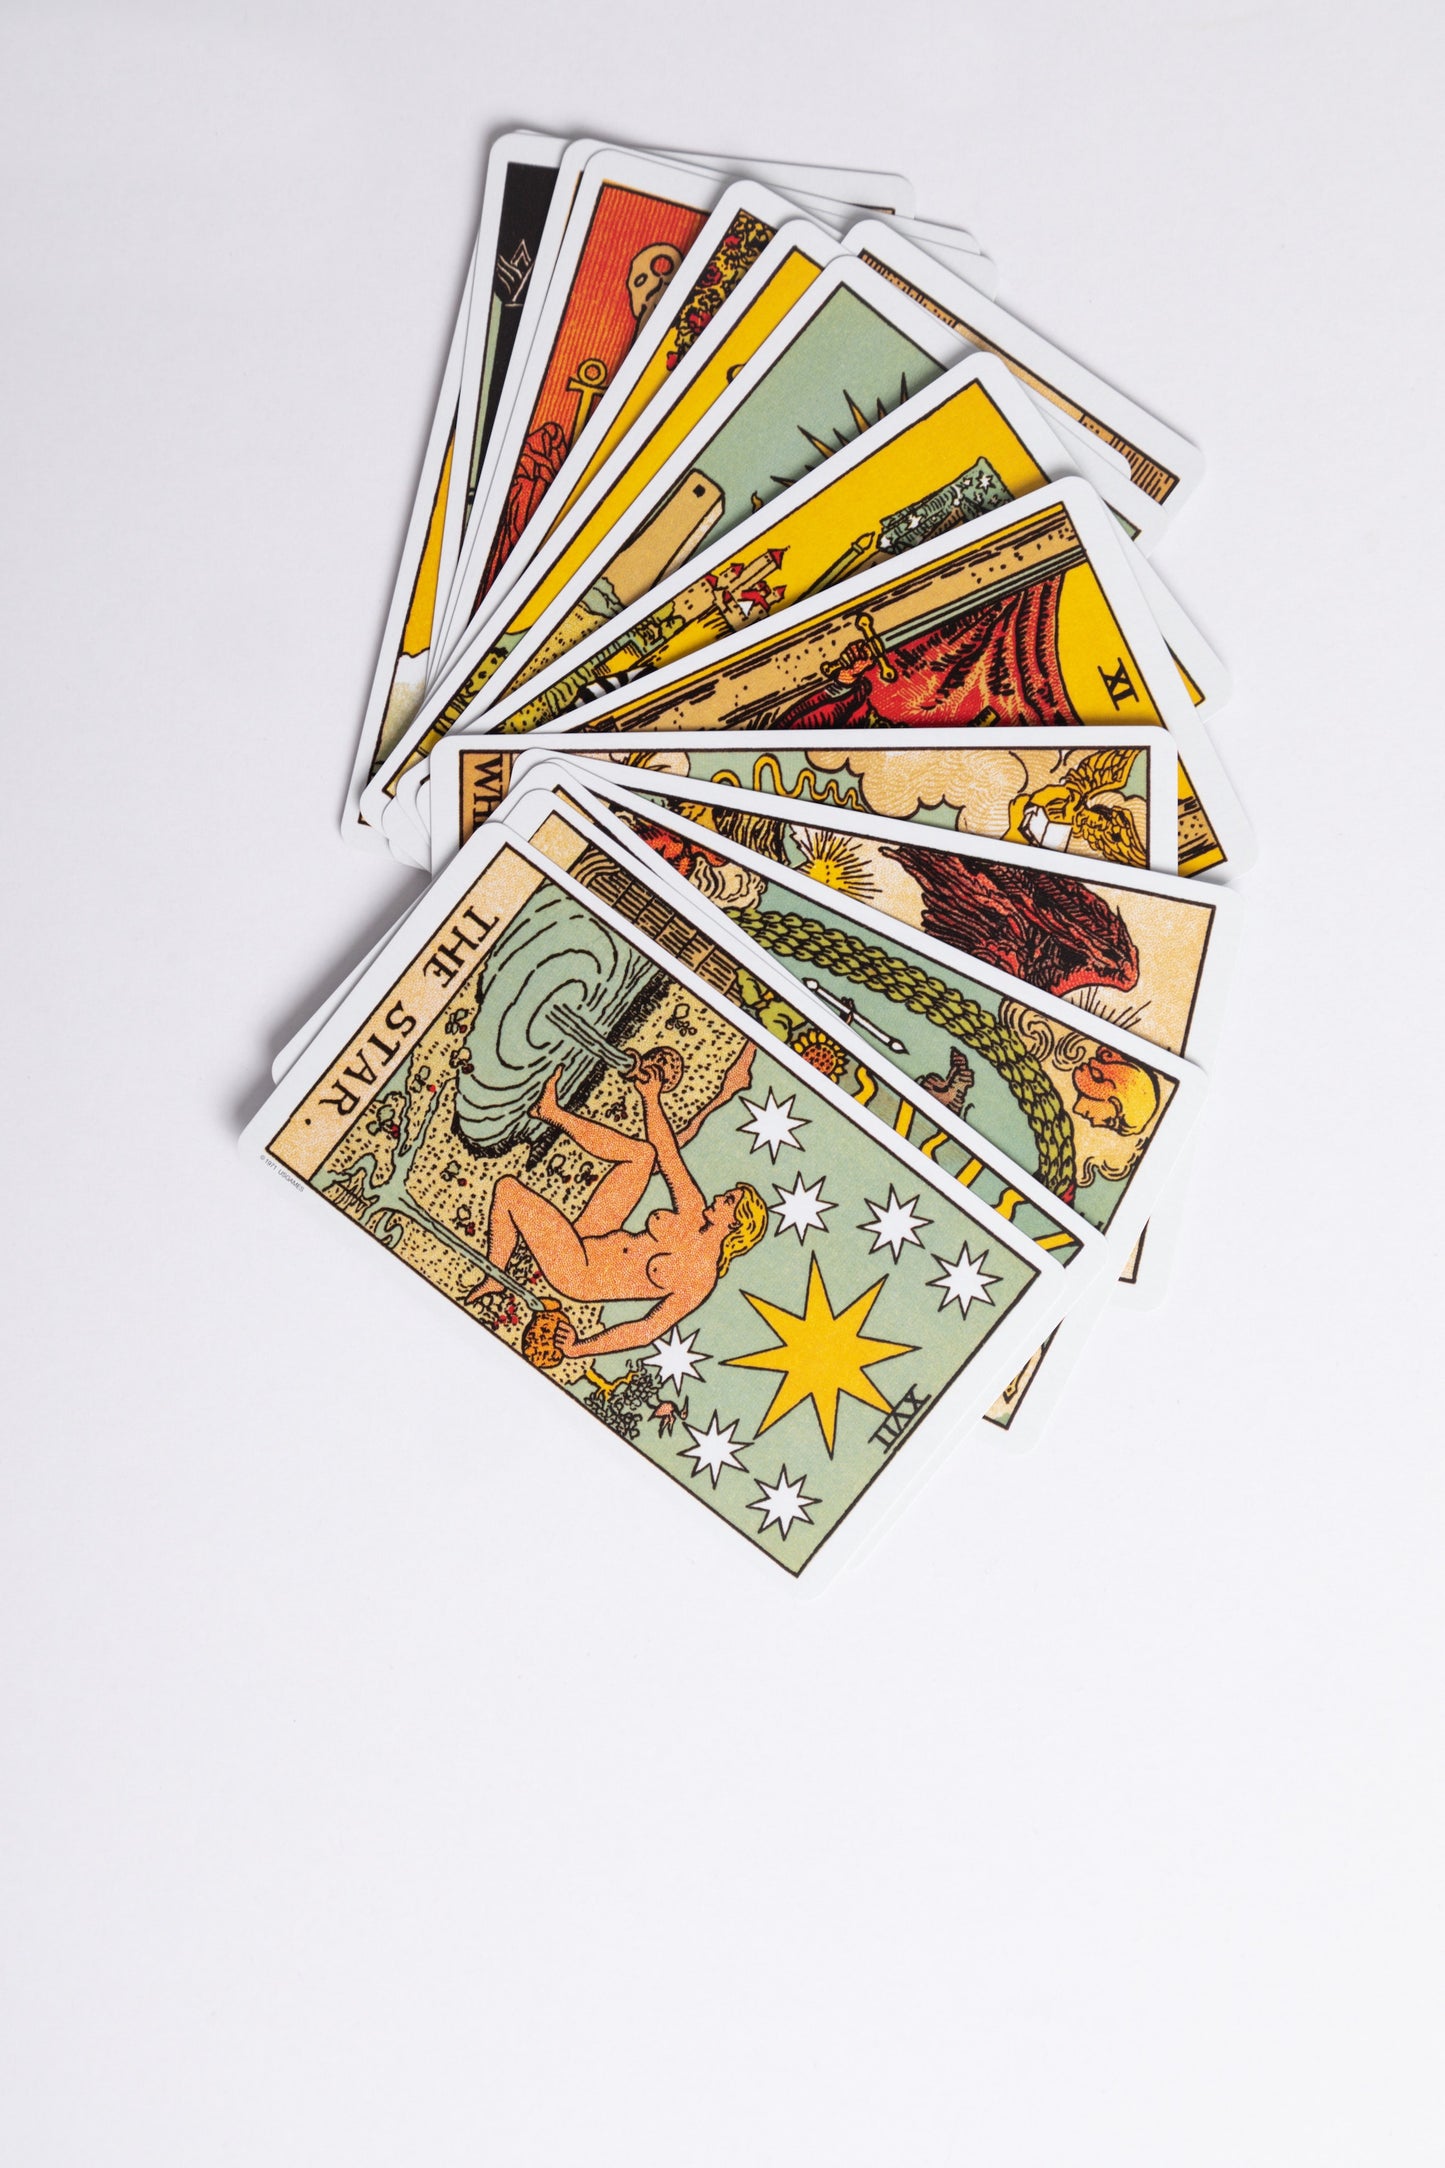 A.E Waite Tarot Cards (standard) Blue Edition